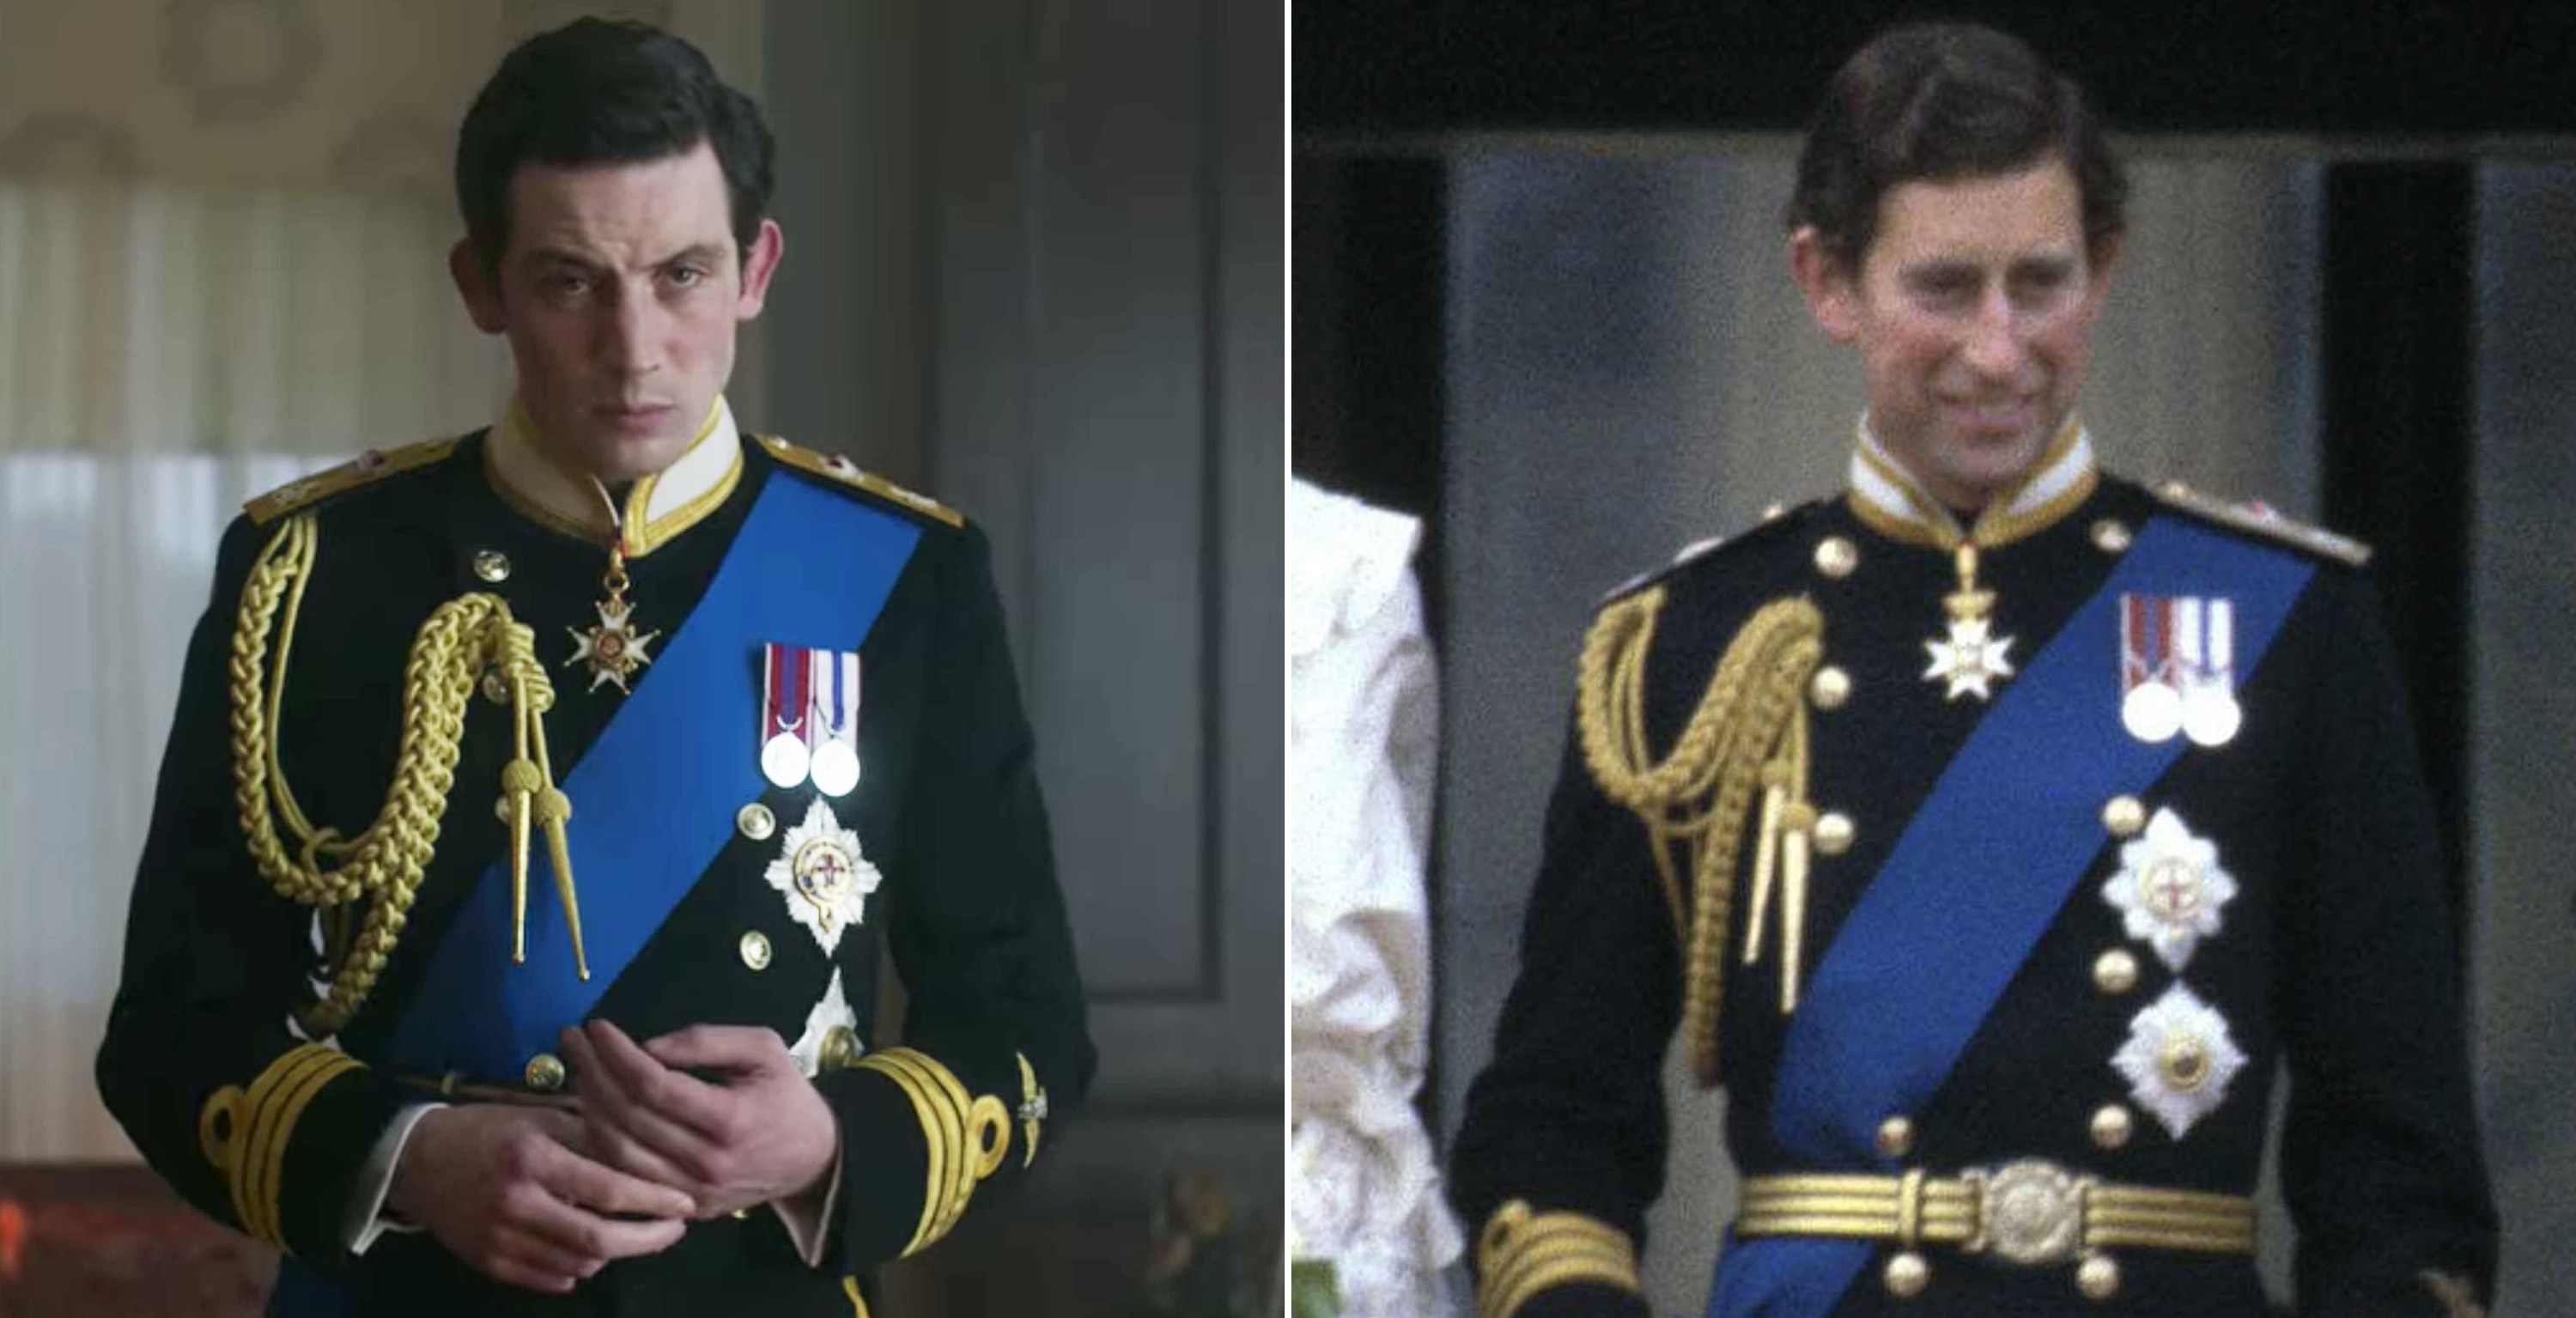 Prince Charles in military regalia 